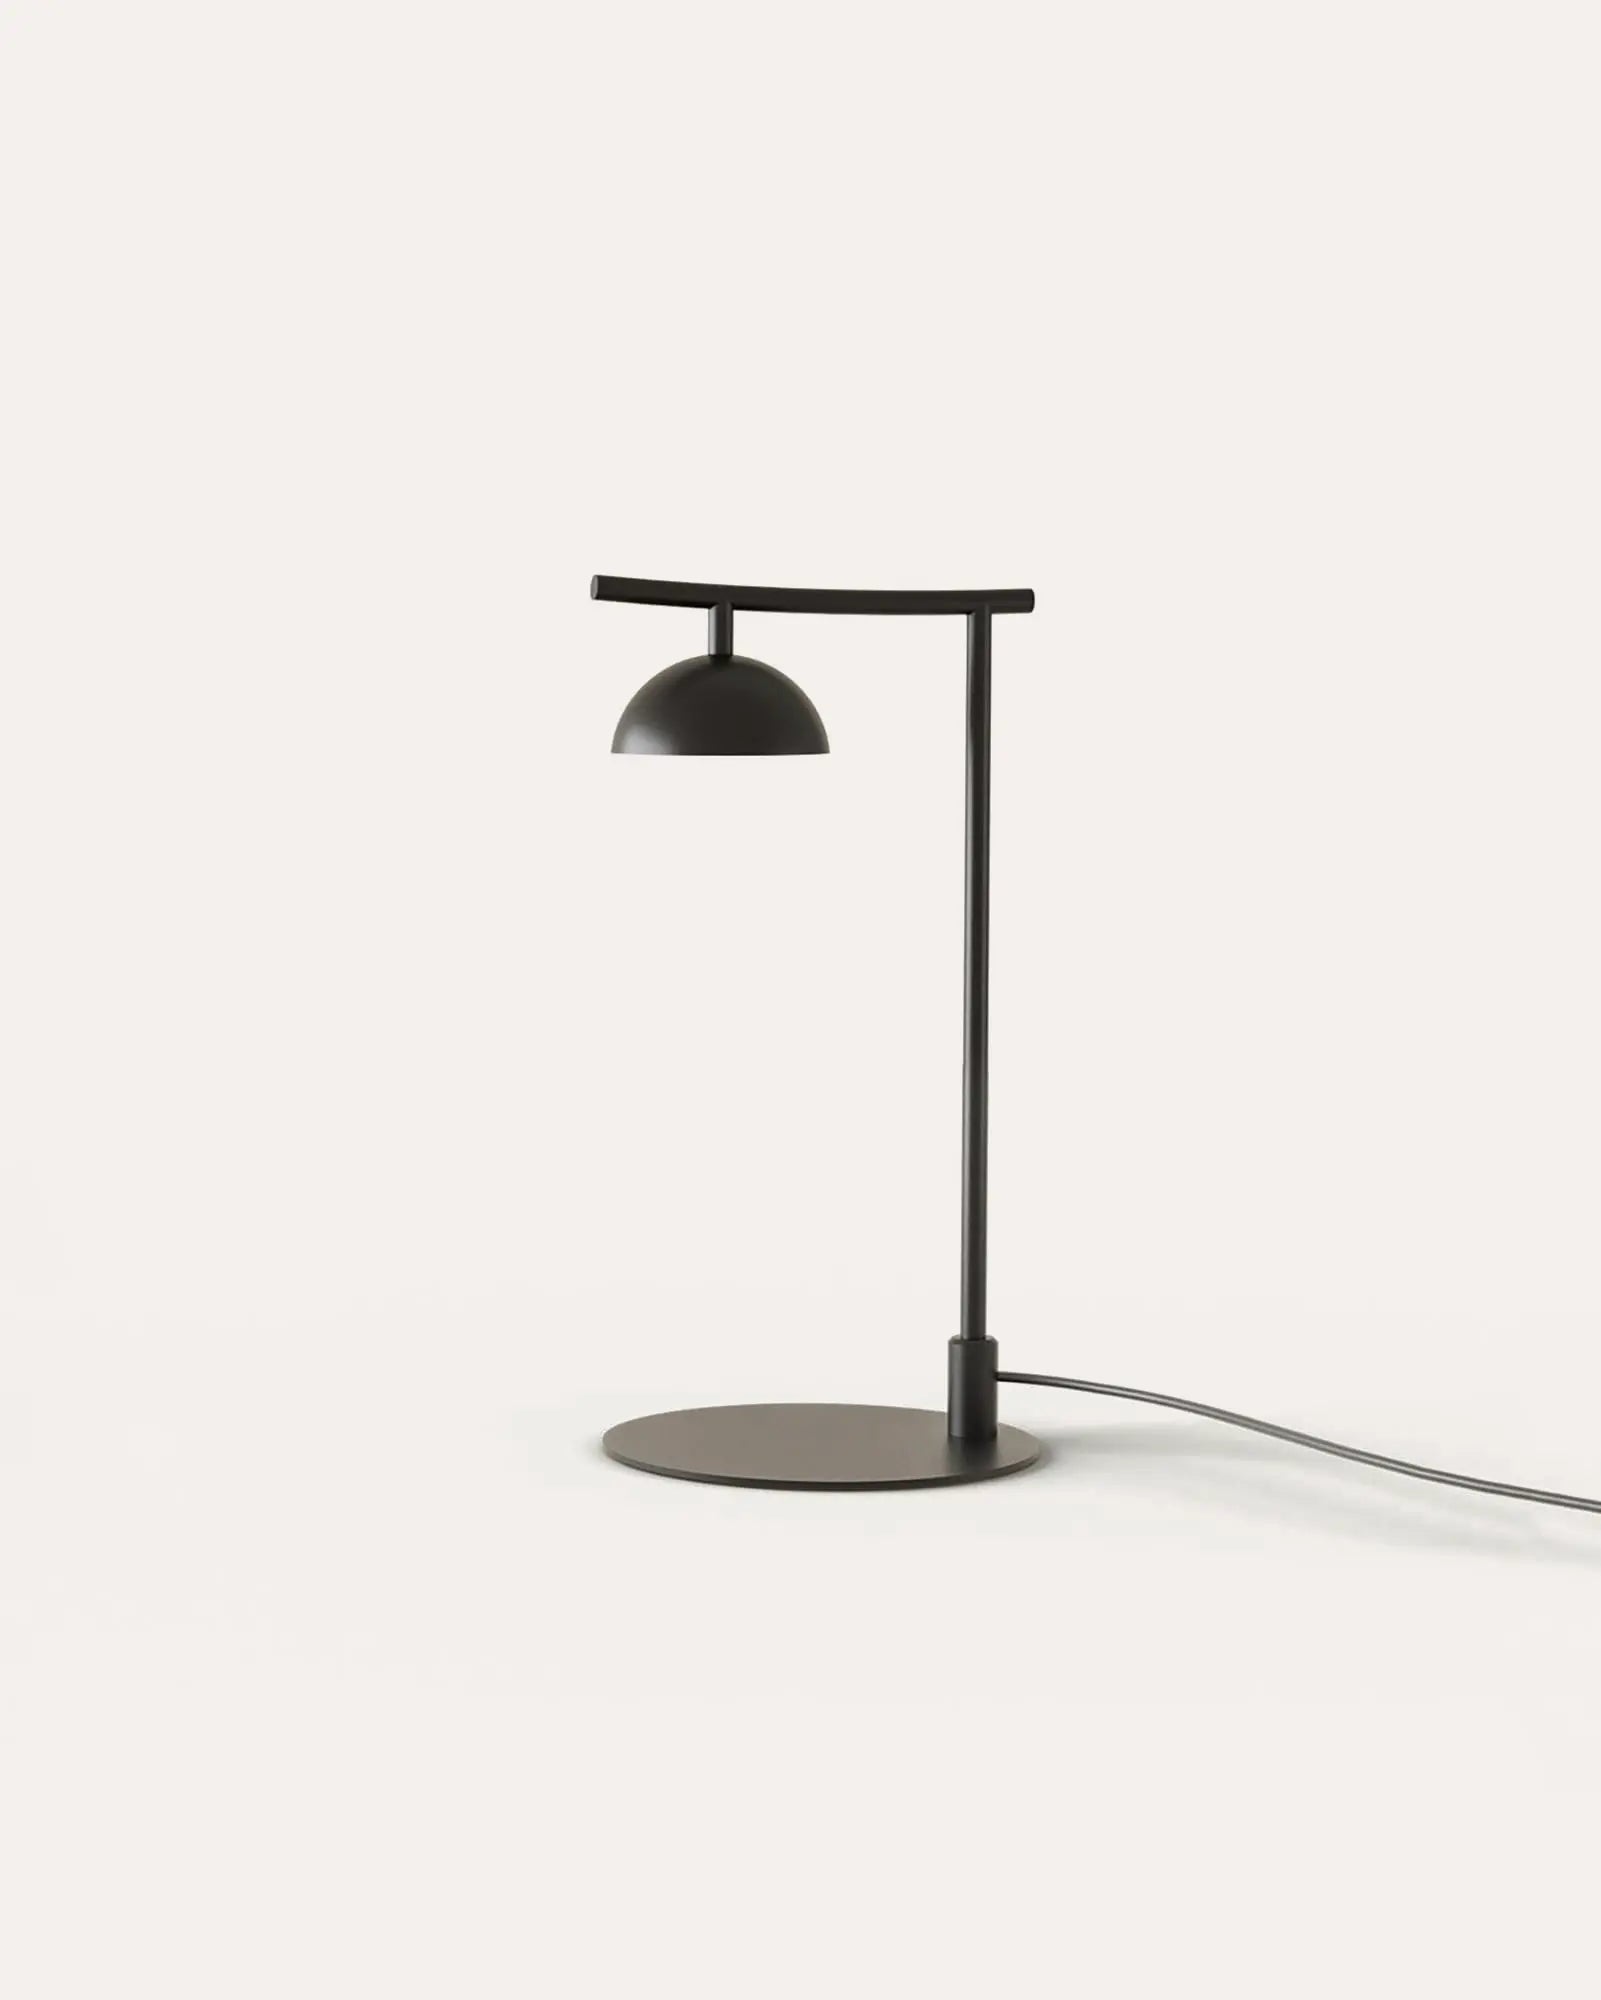 Tana minimalist scandinavian dome shade table lamp product photo